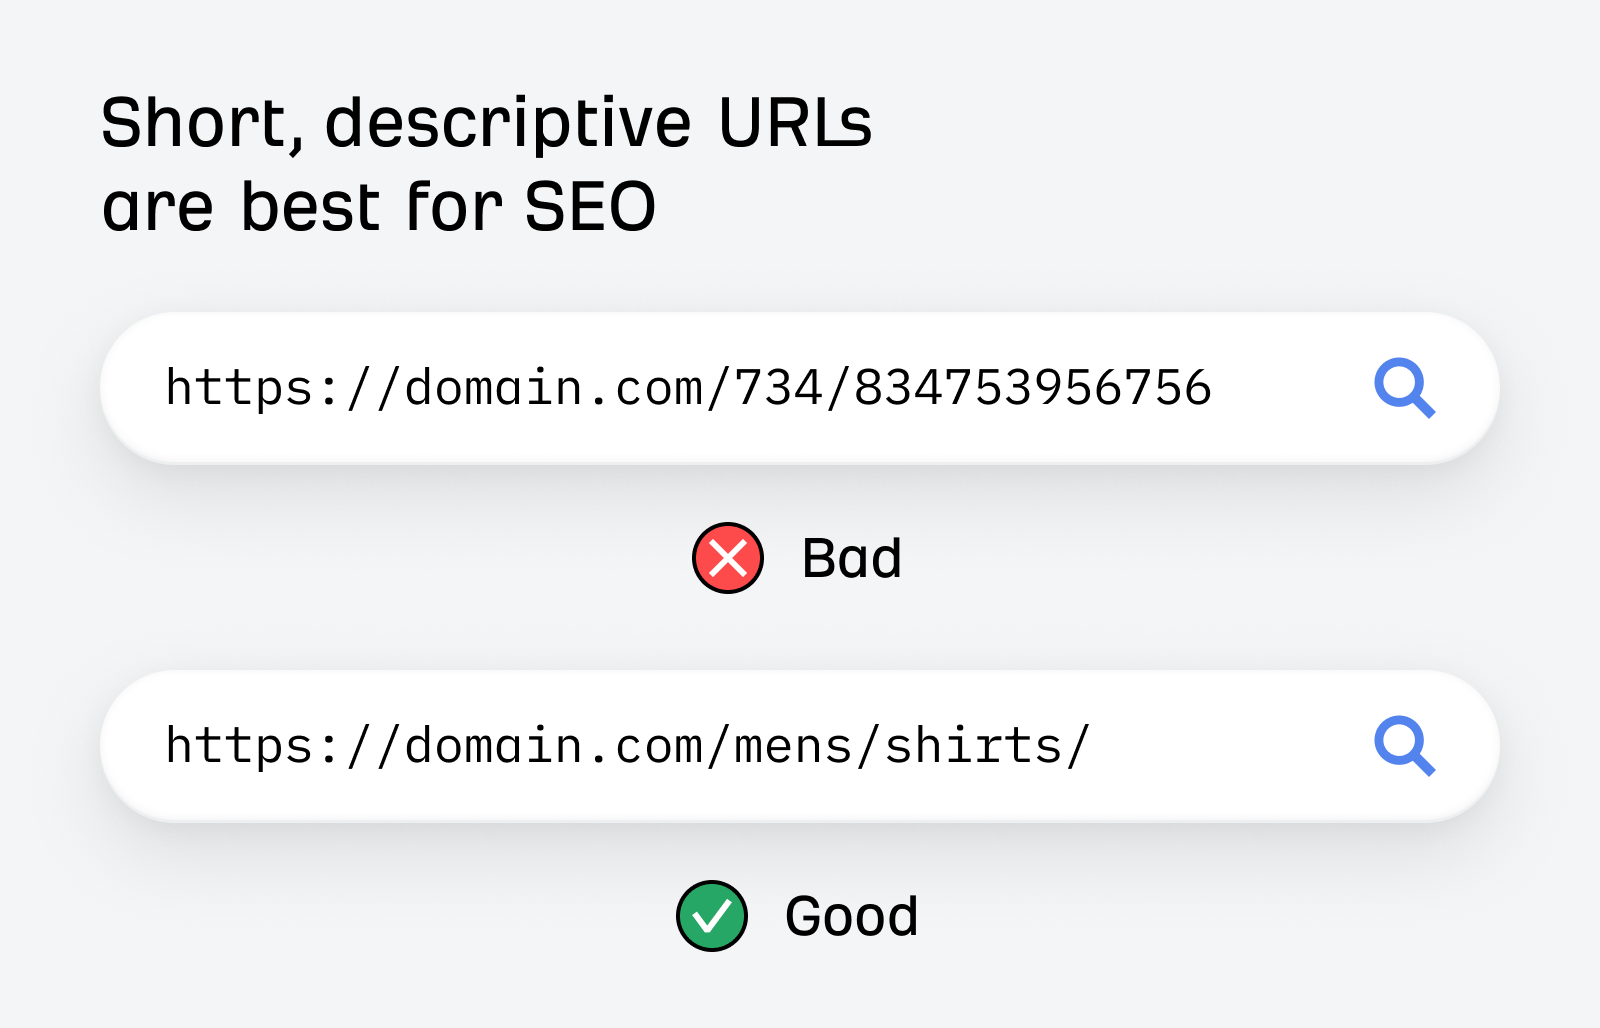 Short, descriptive URLs are best for SEO